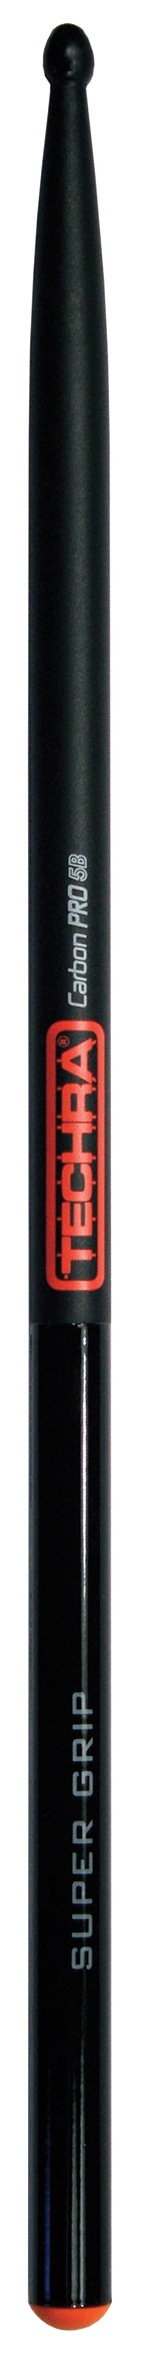 Techra Techra Carbon Pro Super Grip Drumsticks (7A)